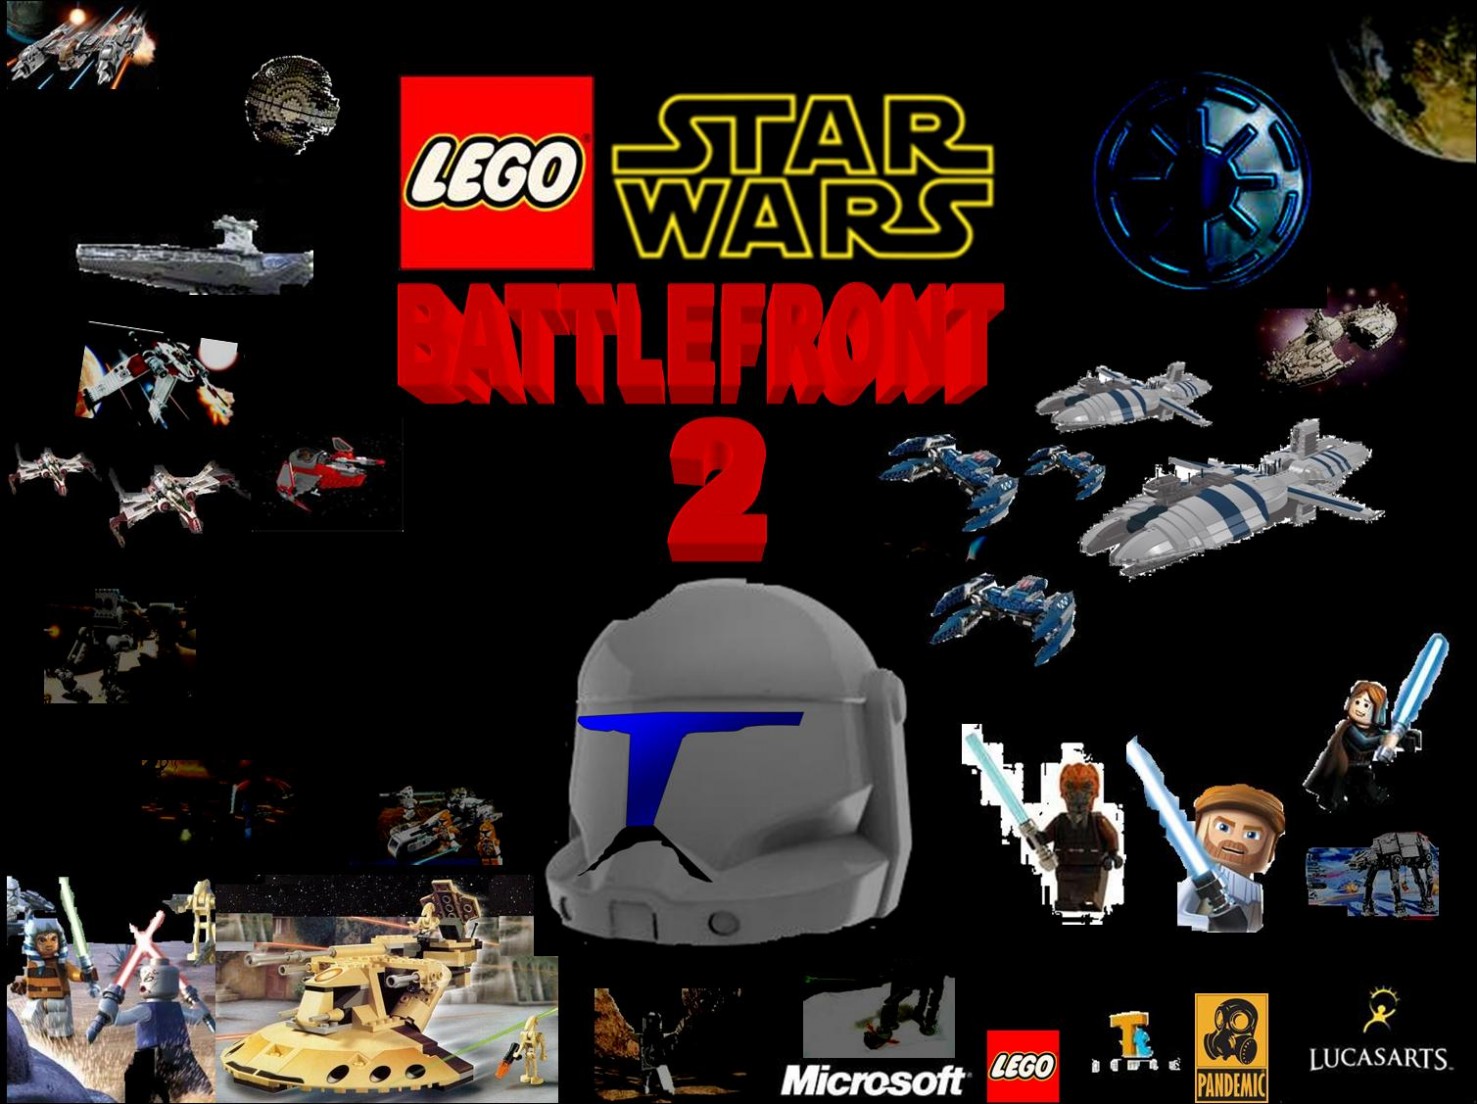 star wars battlefront 2 short download pc free full games